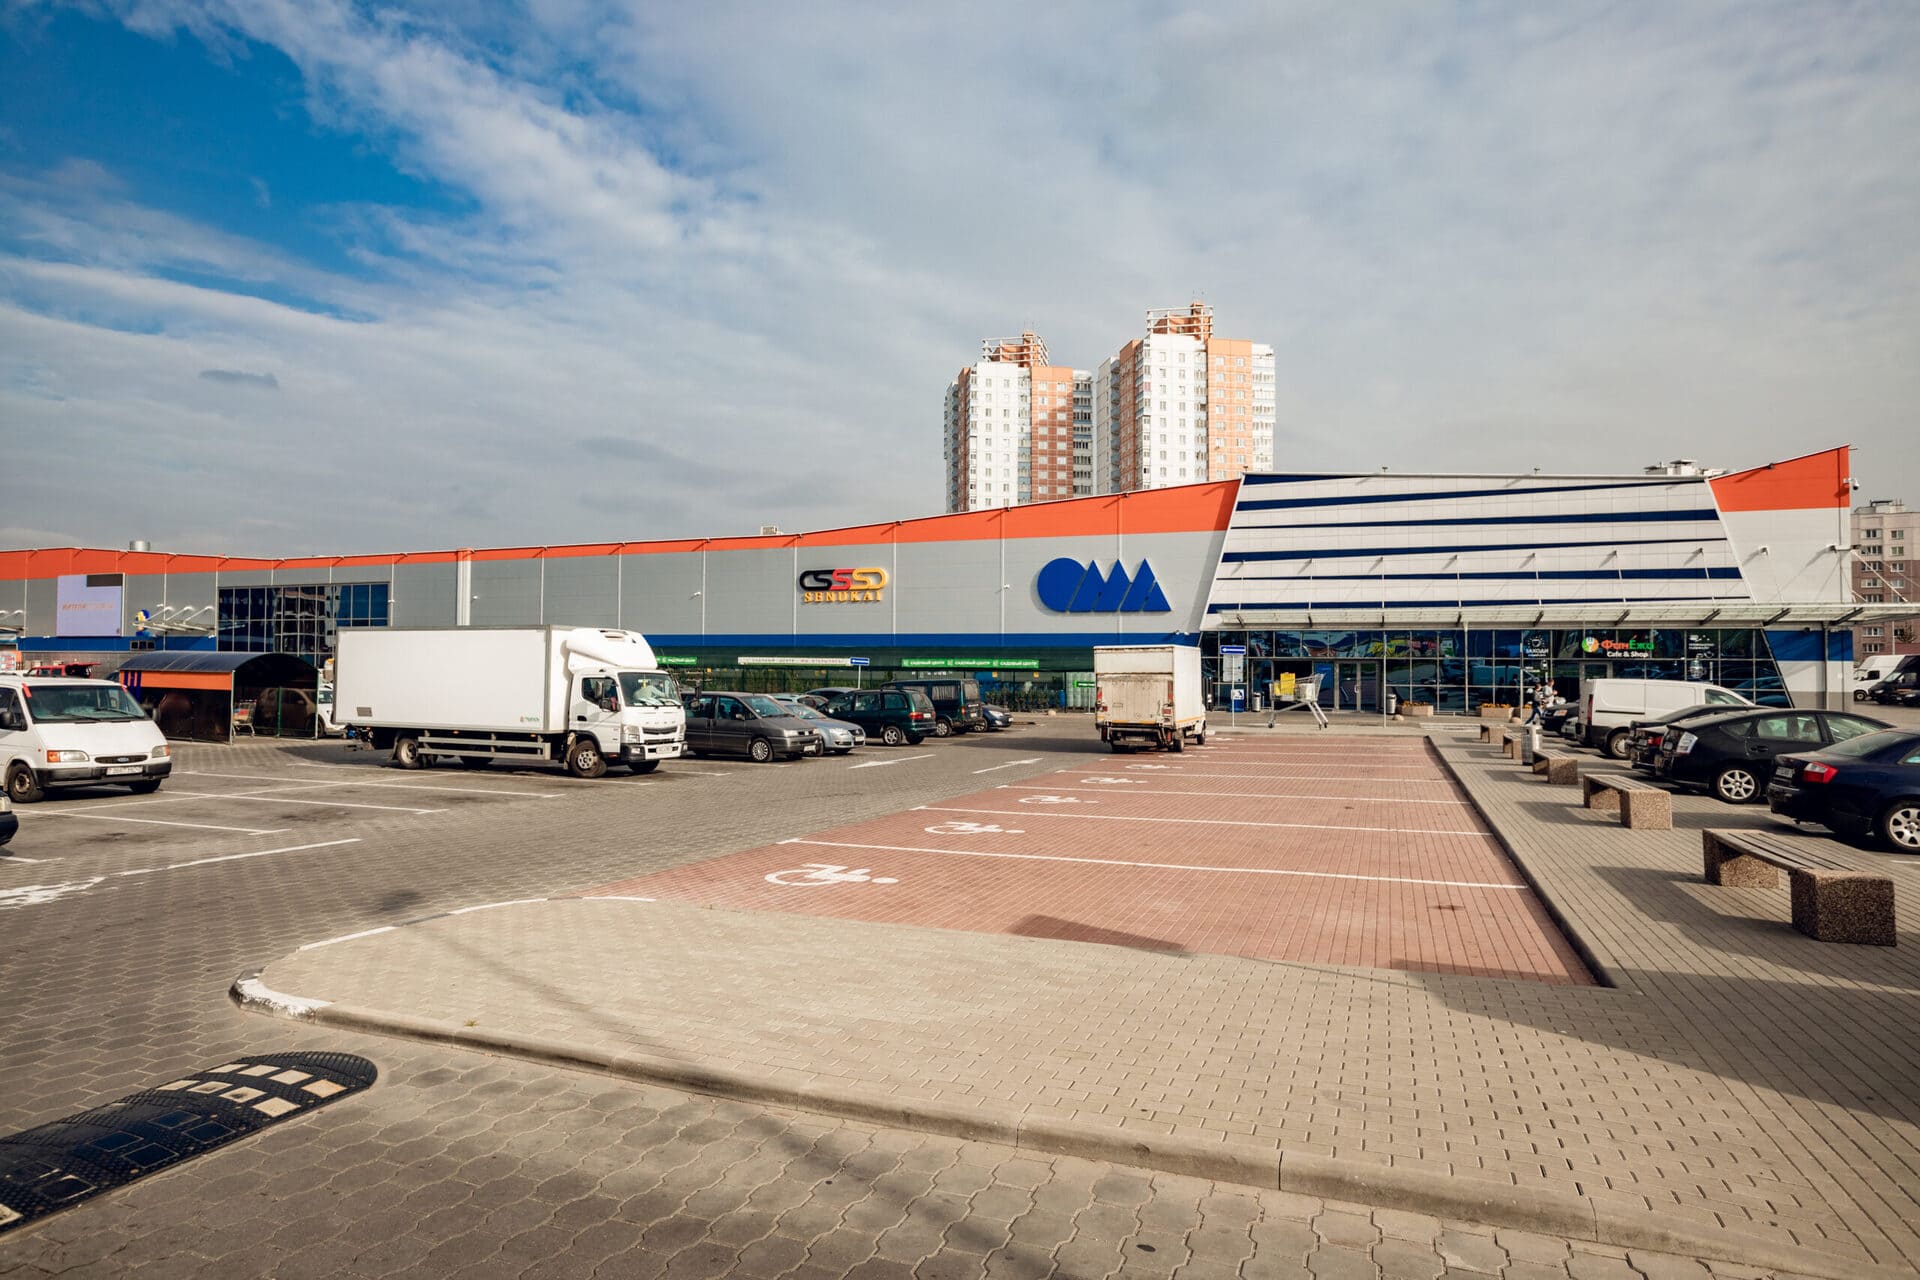 Construction supermarket “OMA”, Kamennogorskaya st., Minsk